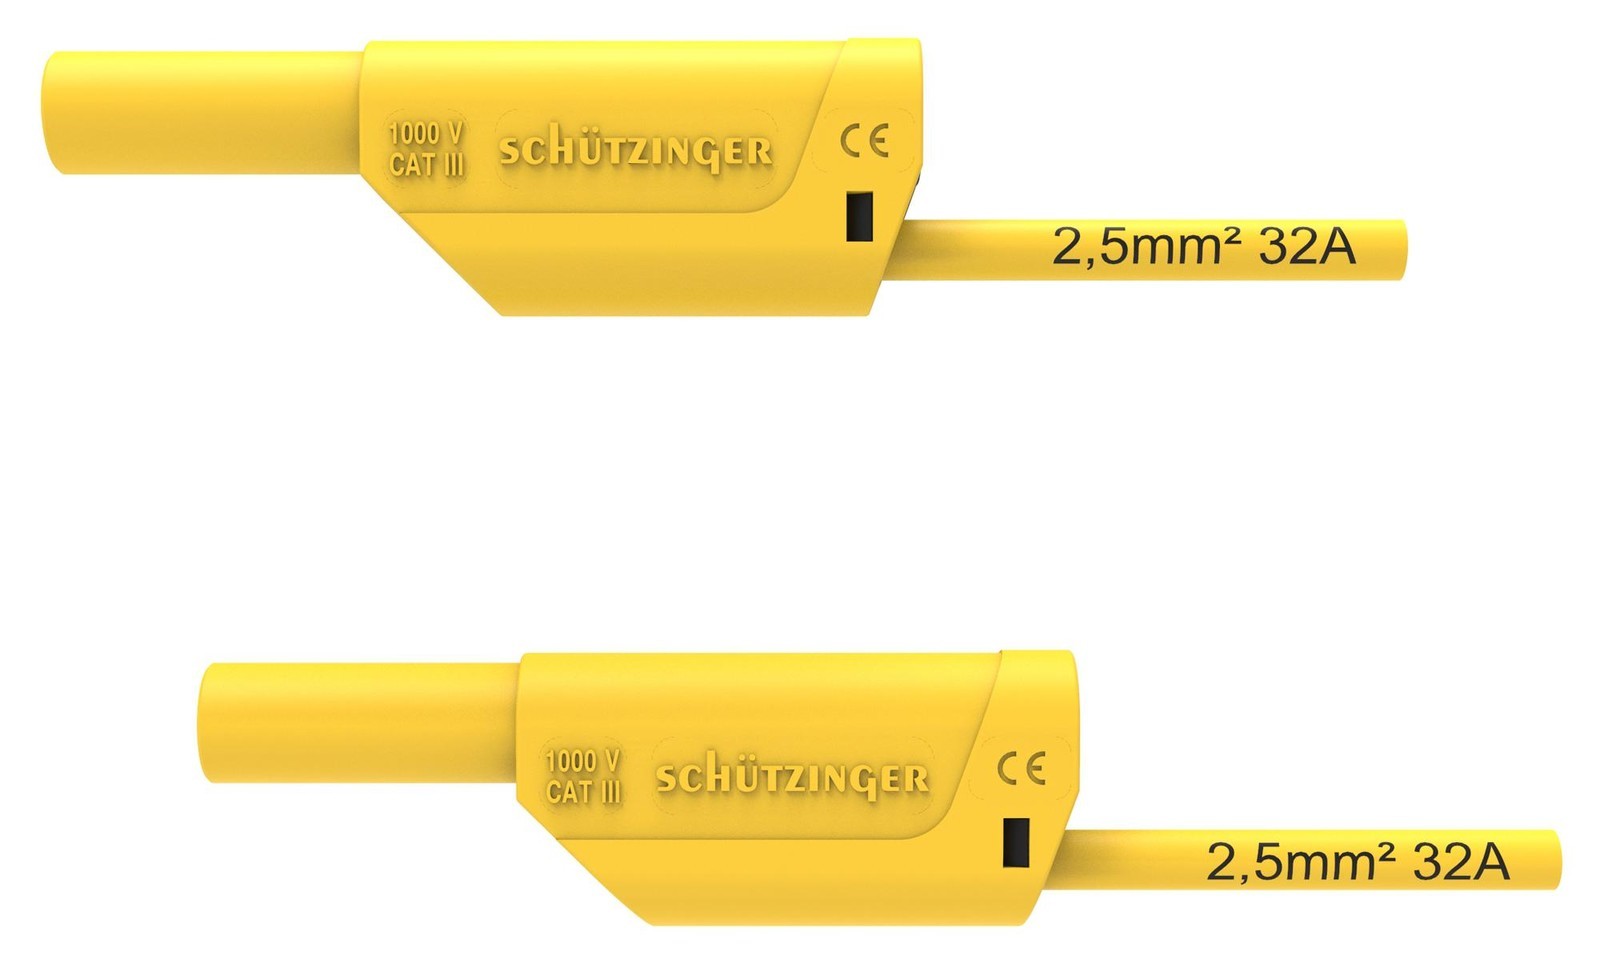 Schutzinger Di Vsfk 8700 / 2.5 / 200 / Ge 4mm Banana Plug-Sq, Shrouded, Yellow, 2M